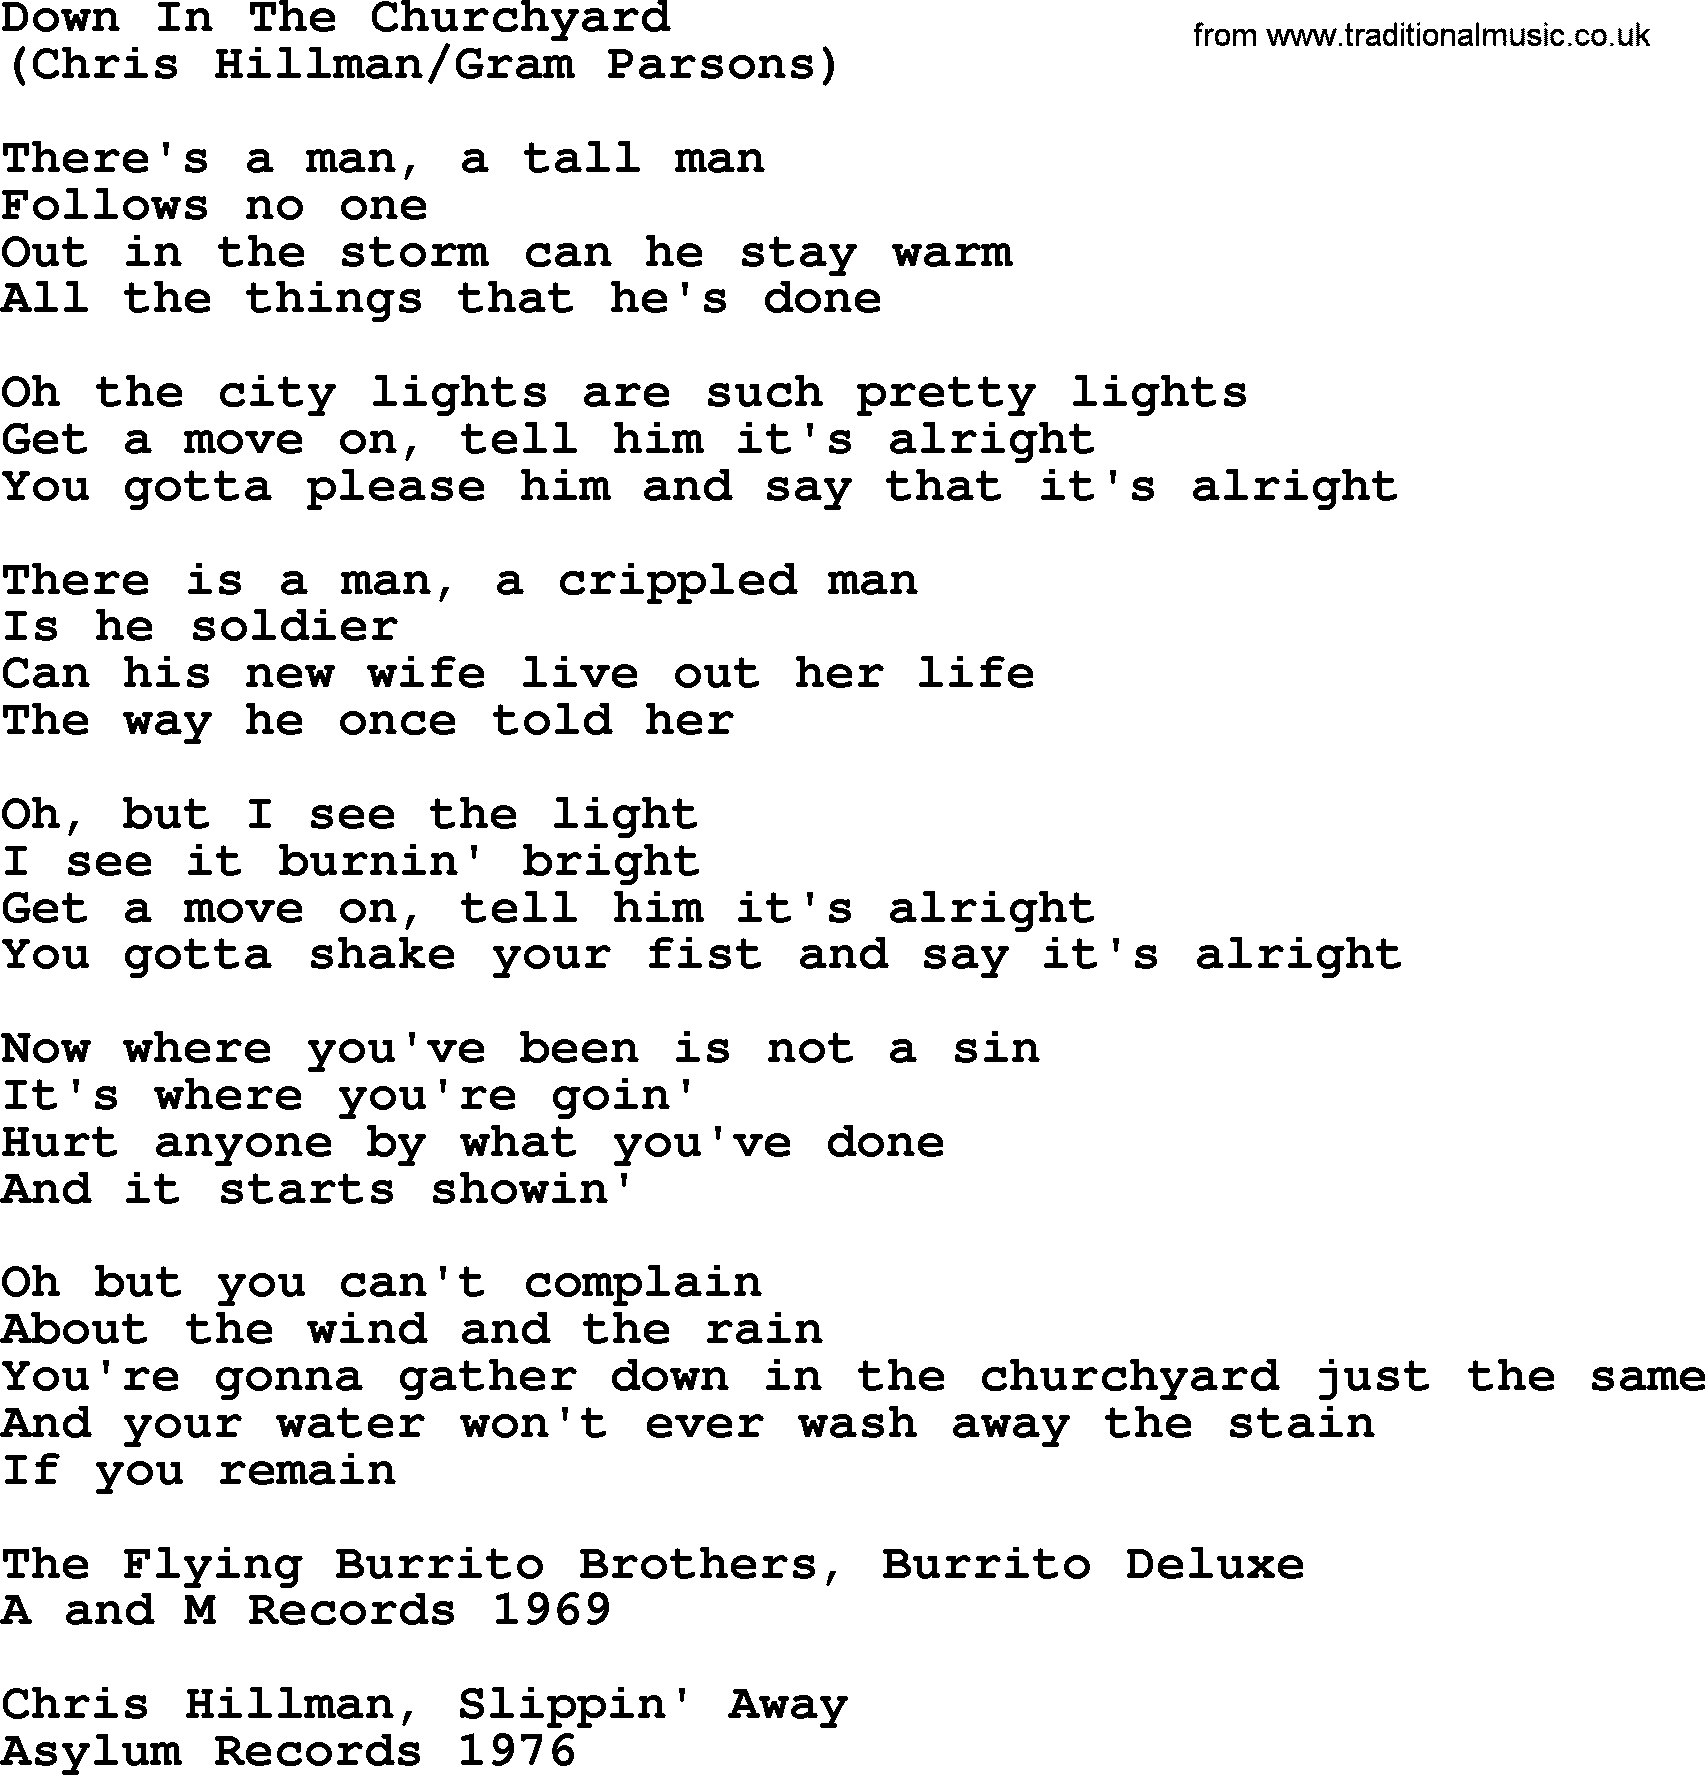 The Byrds song Down In The Churchyard, lyrics